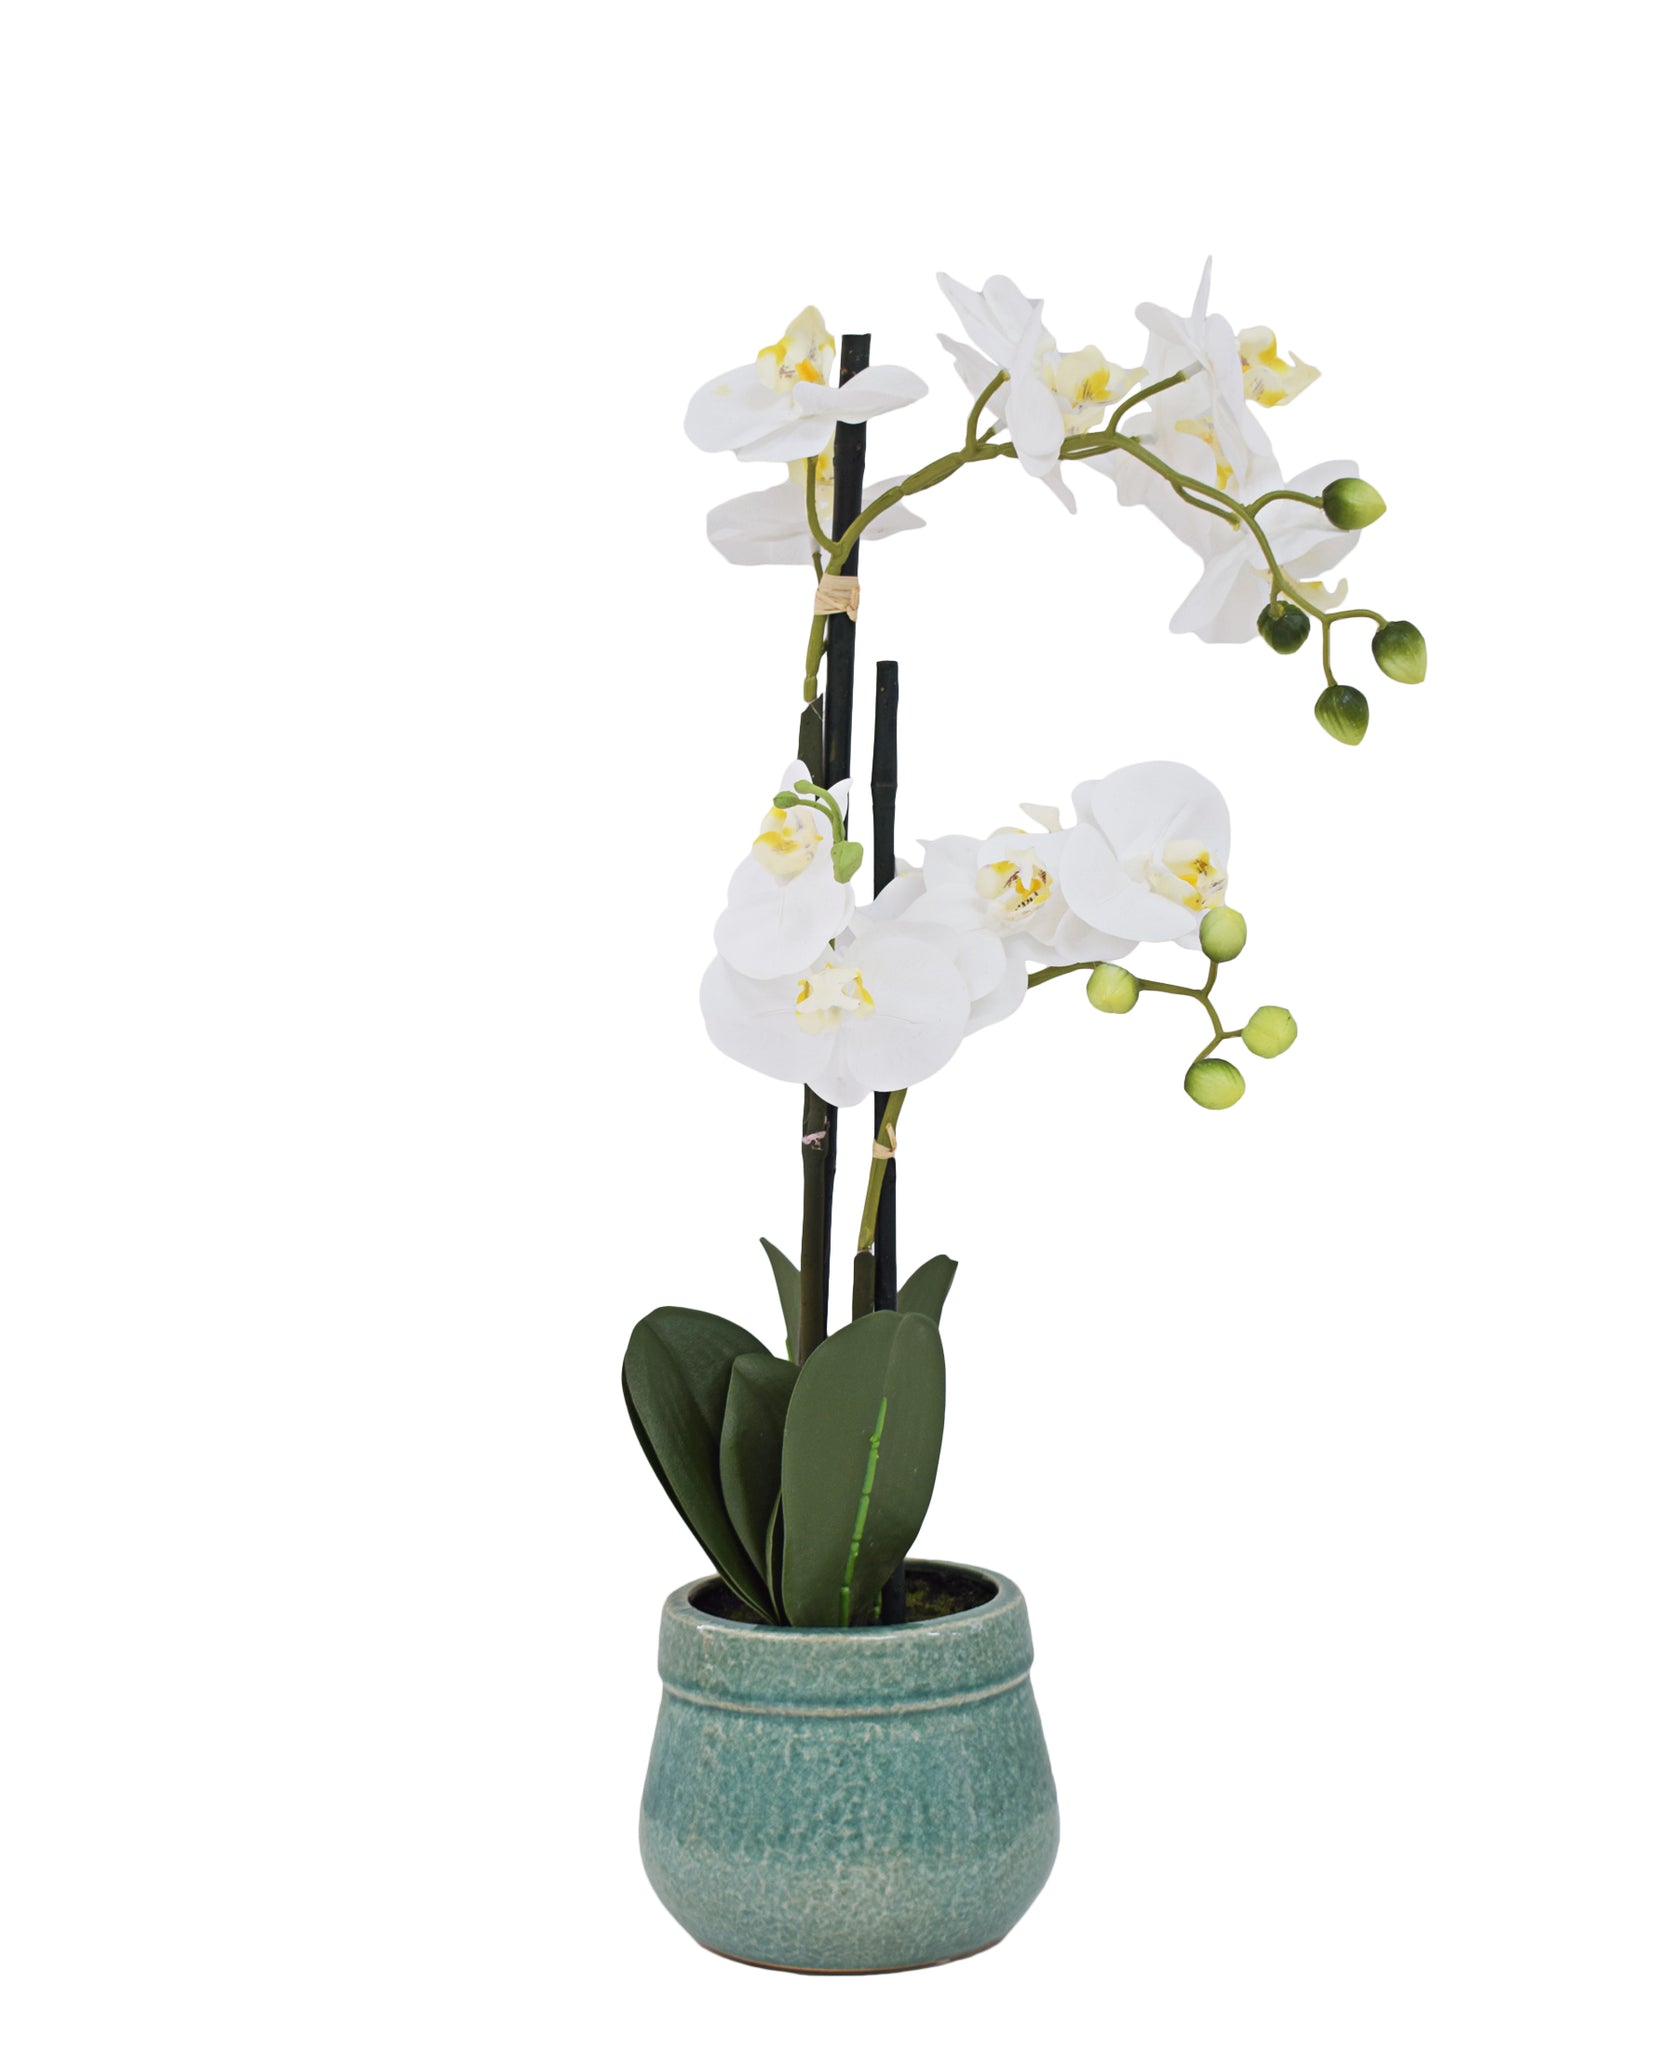 Urban Decor Orchid Pot Plant 55CM - Green